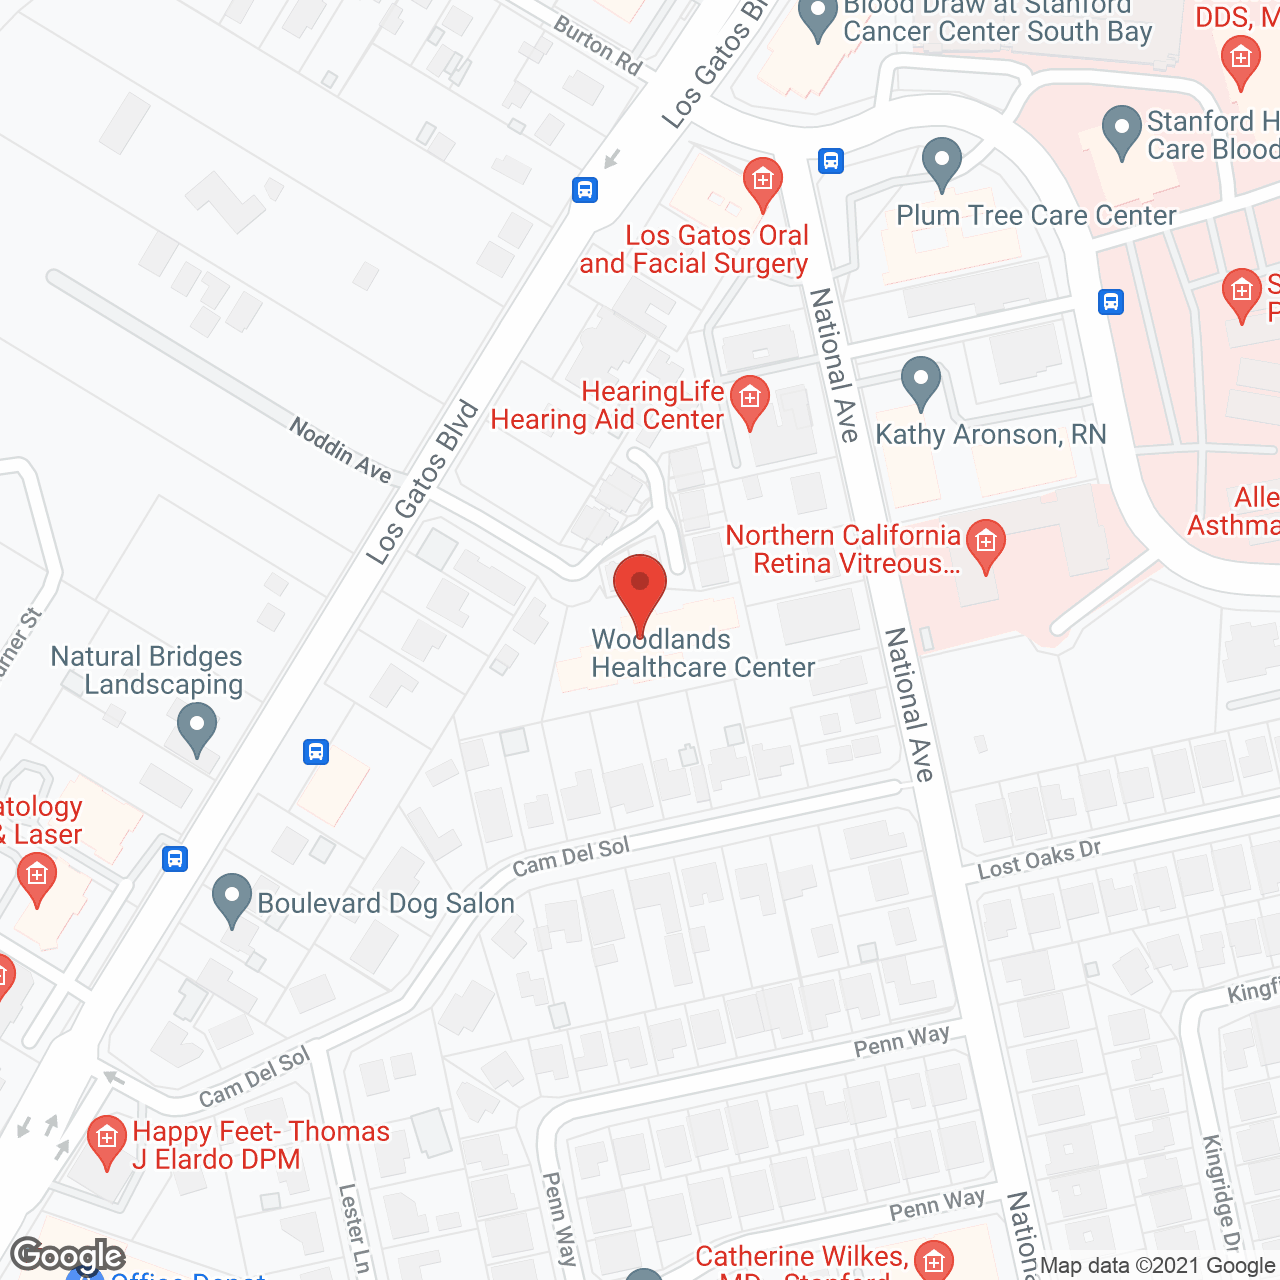 Woodlands Healthcare Center in google map